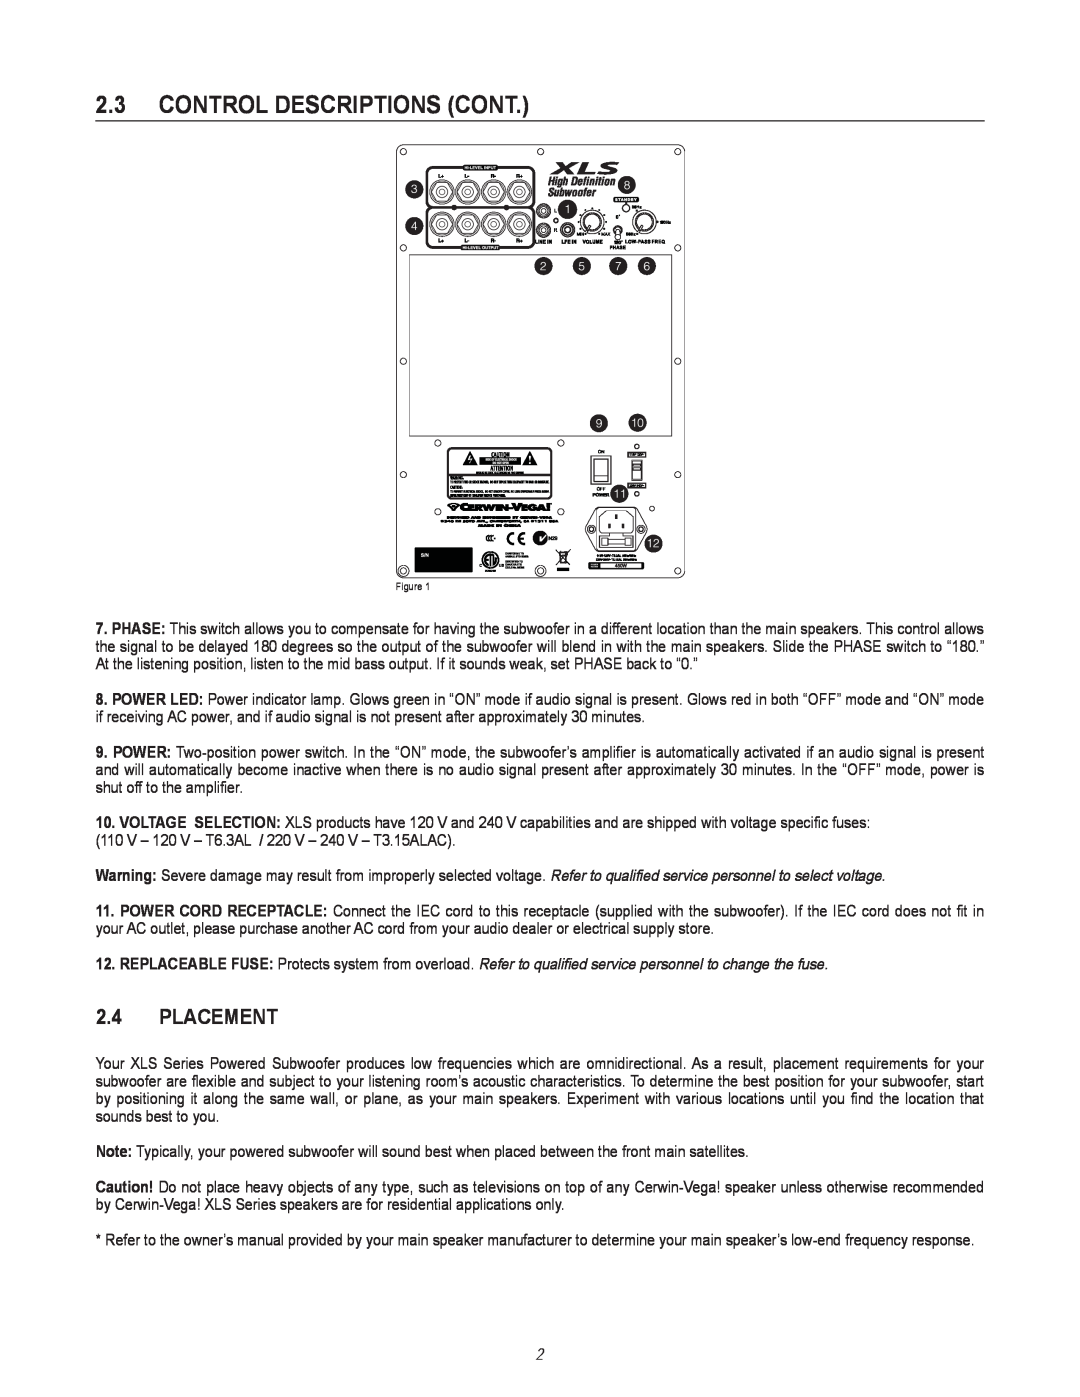 Cerwin-Vega XLS-12S, XLS-15S user manual 2.3control descriptions cont, 2.4PLACEMENT 